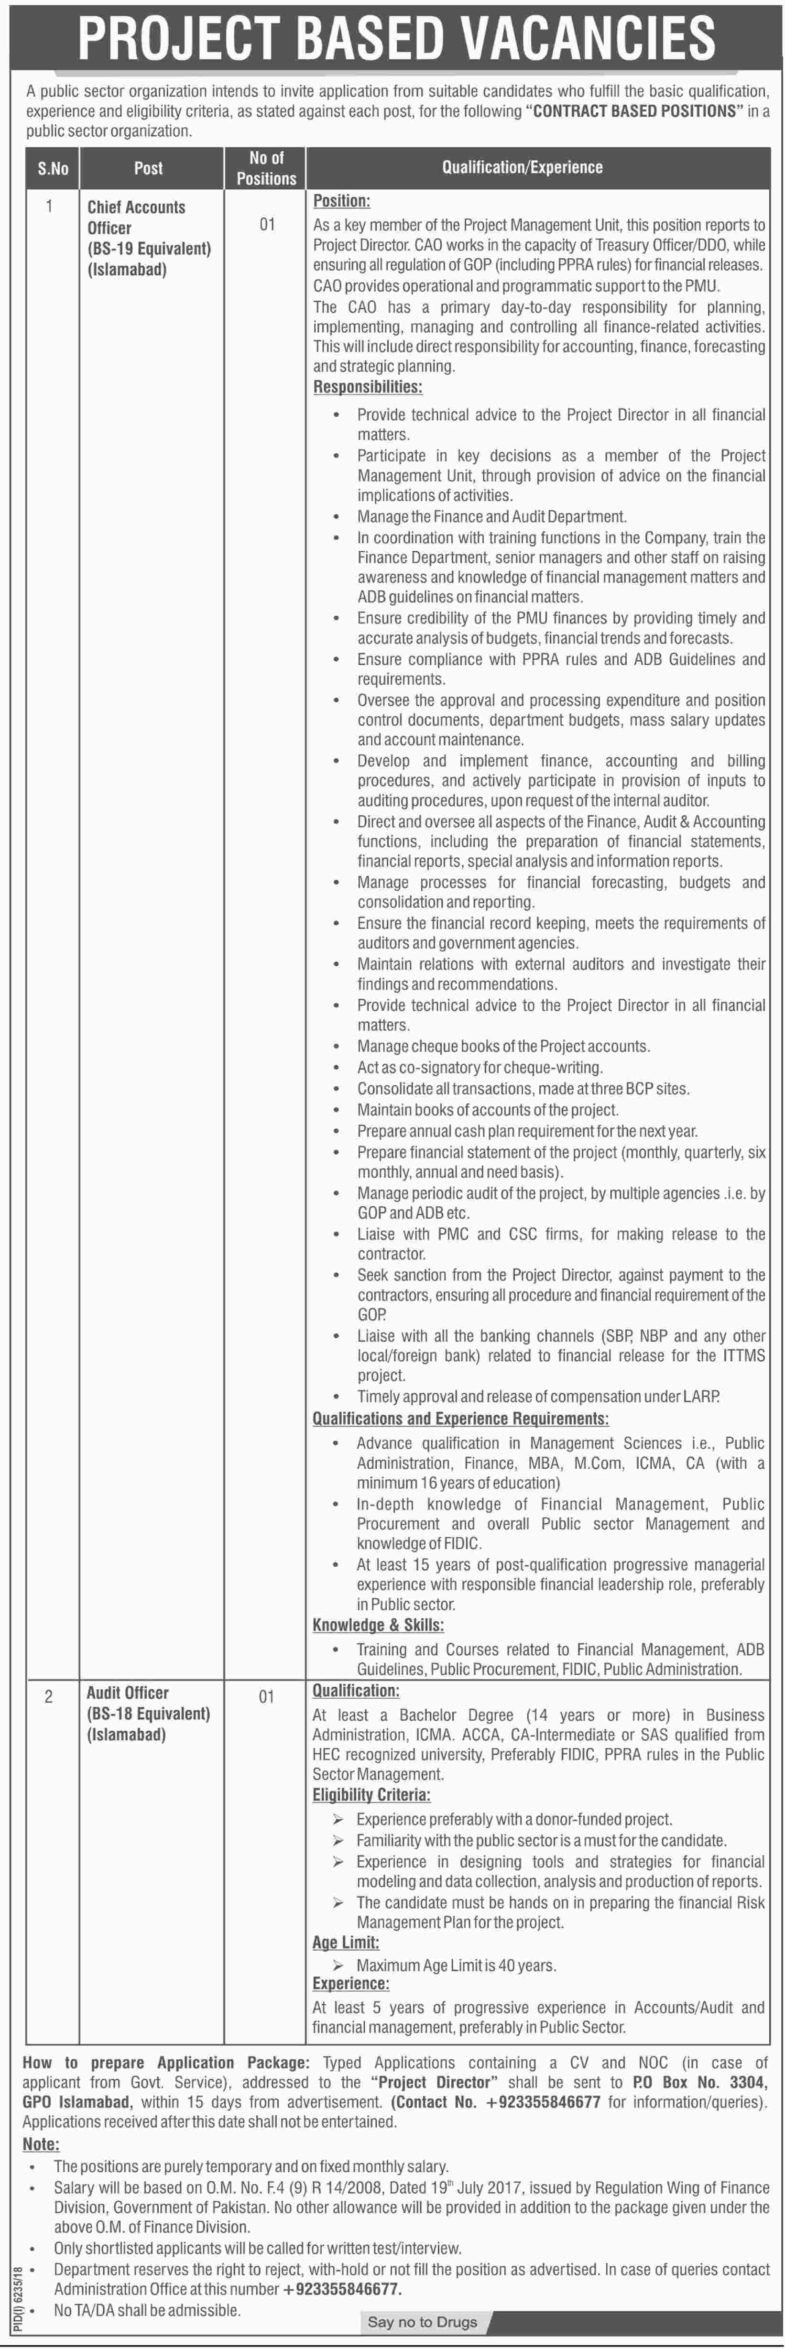 PO Box 3304 Islamabad Public Sector Organization Jobs 2019 Accounts & Audit Officers